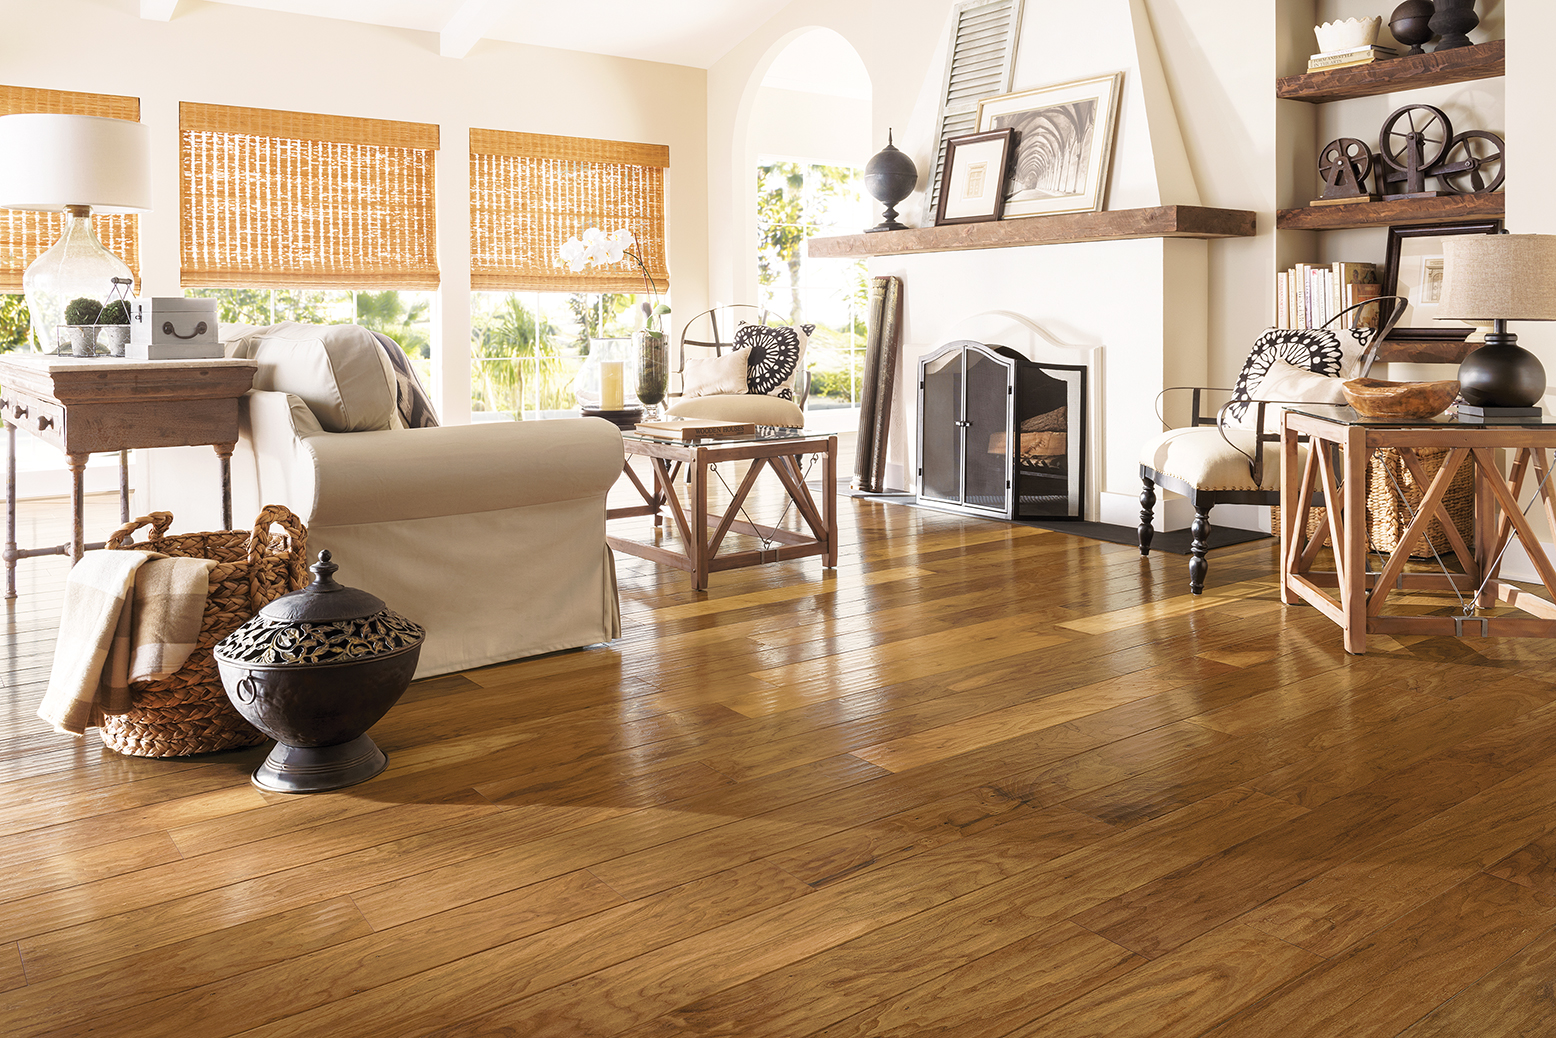 Hardwood Floors That Last Designnj, 5 Inch Wide Hardwood Flooring